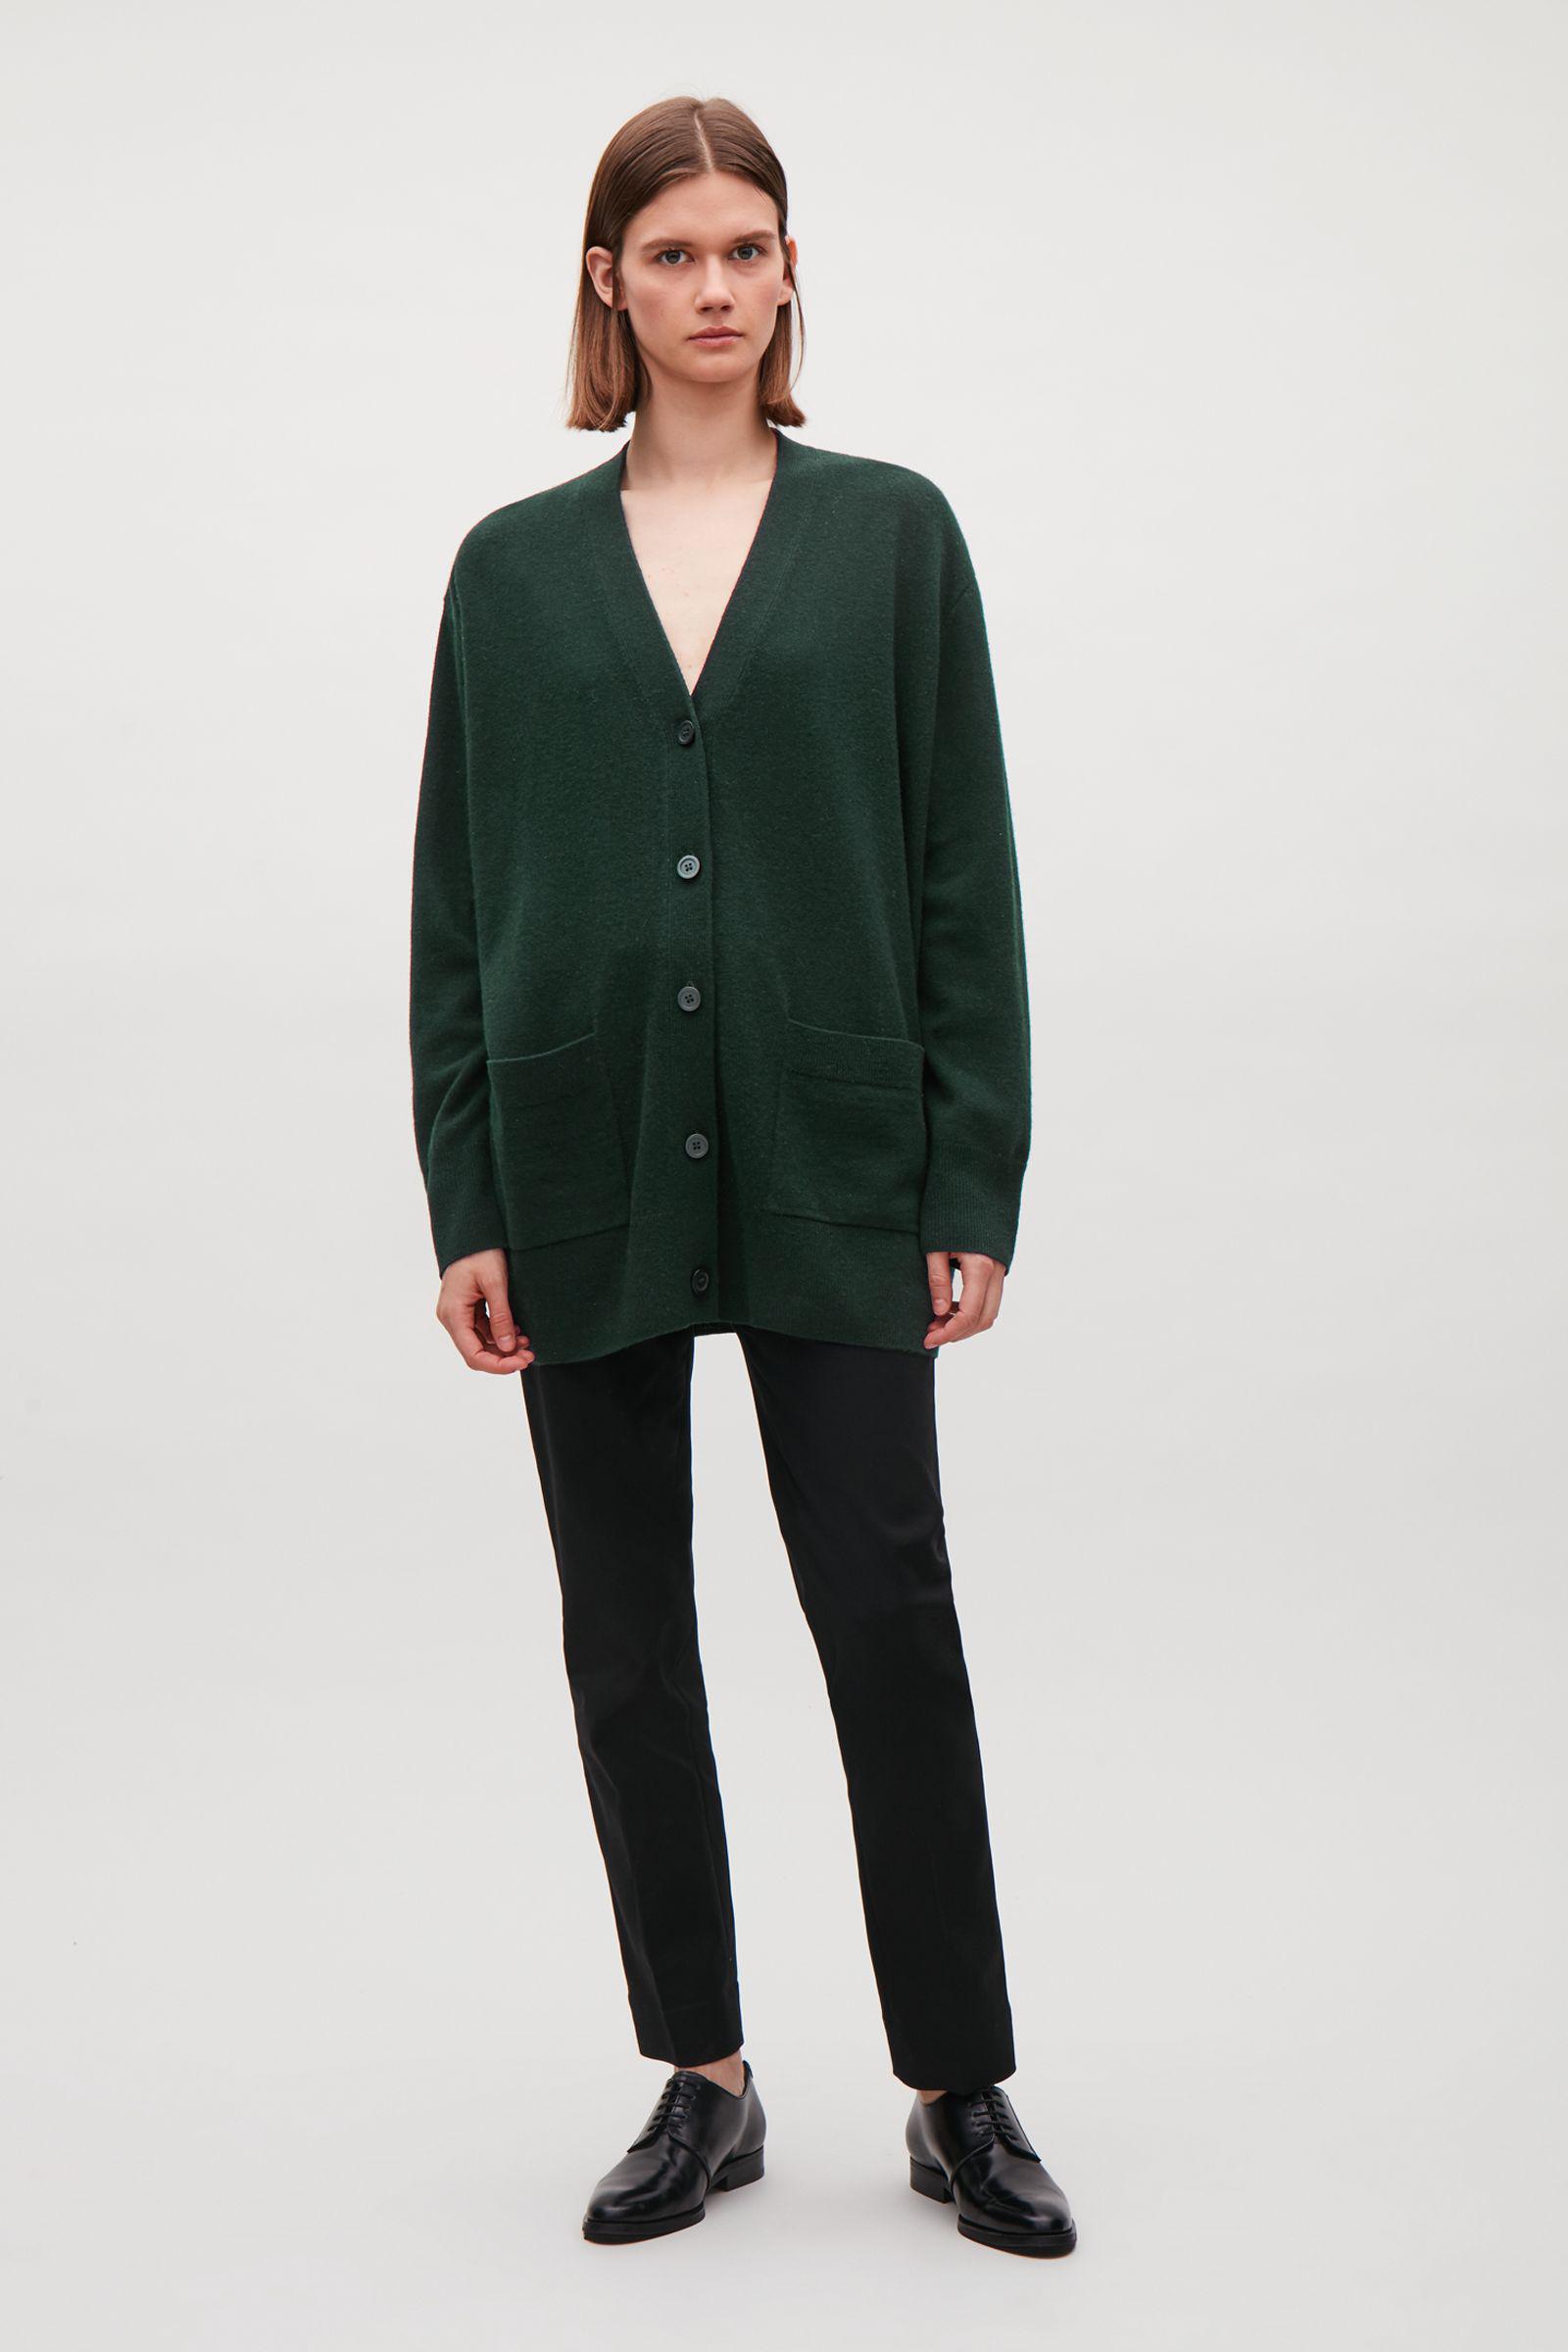 COS Speckled Oversized Wool Cardigan in Dark Green (Green) | Lyst